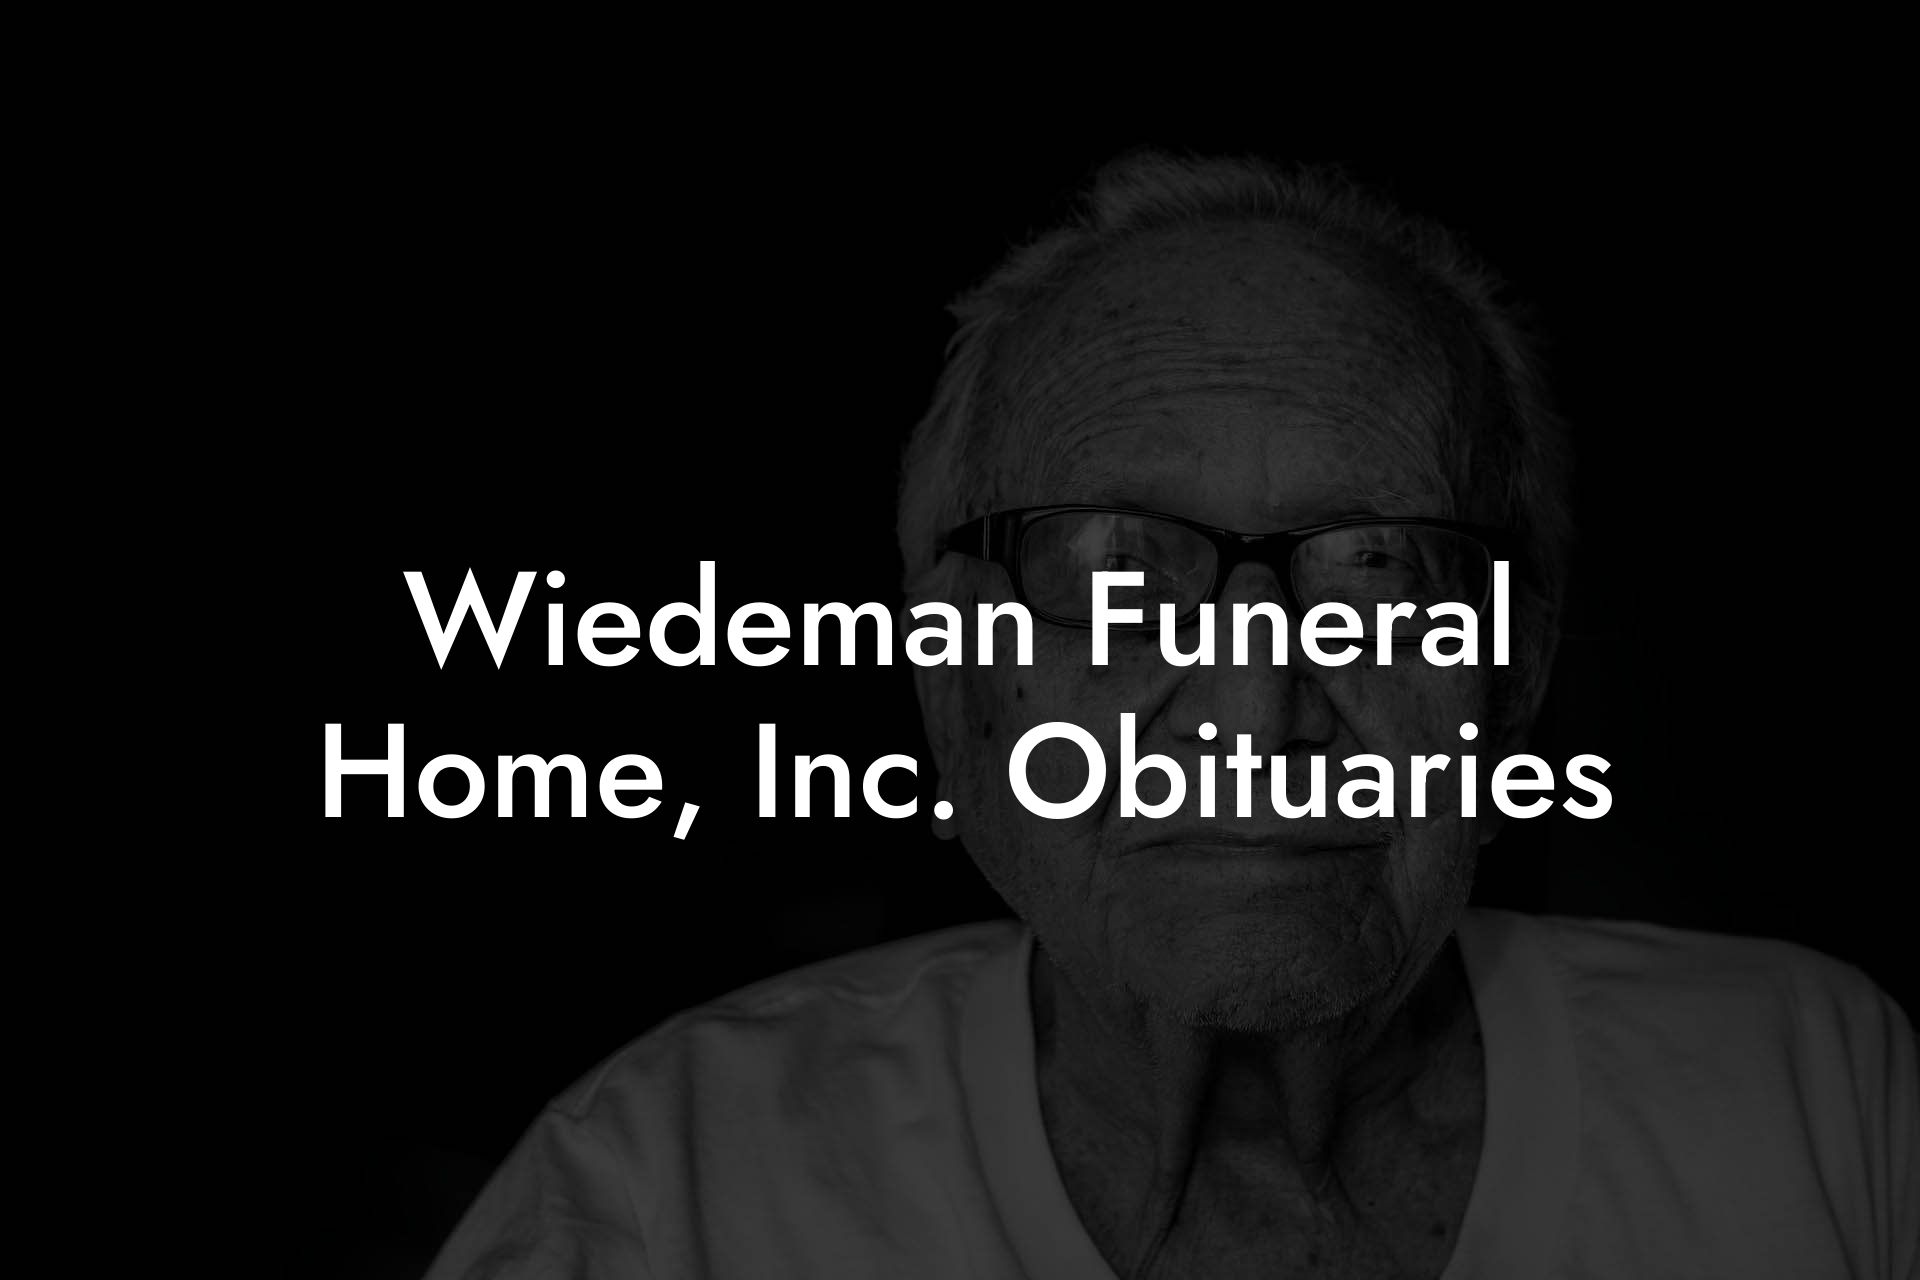 Wiedeman Funeral Home, Inc. Obituaries